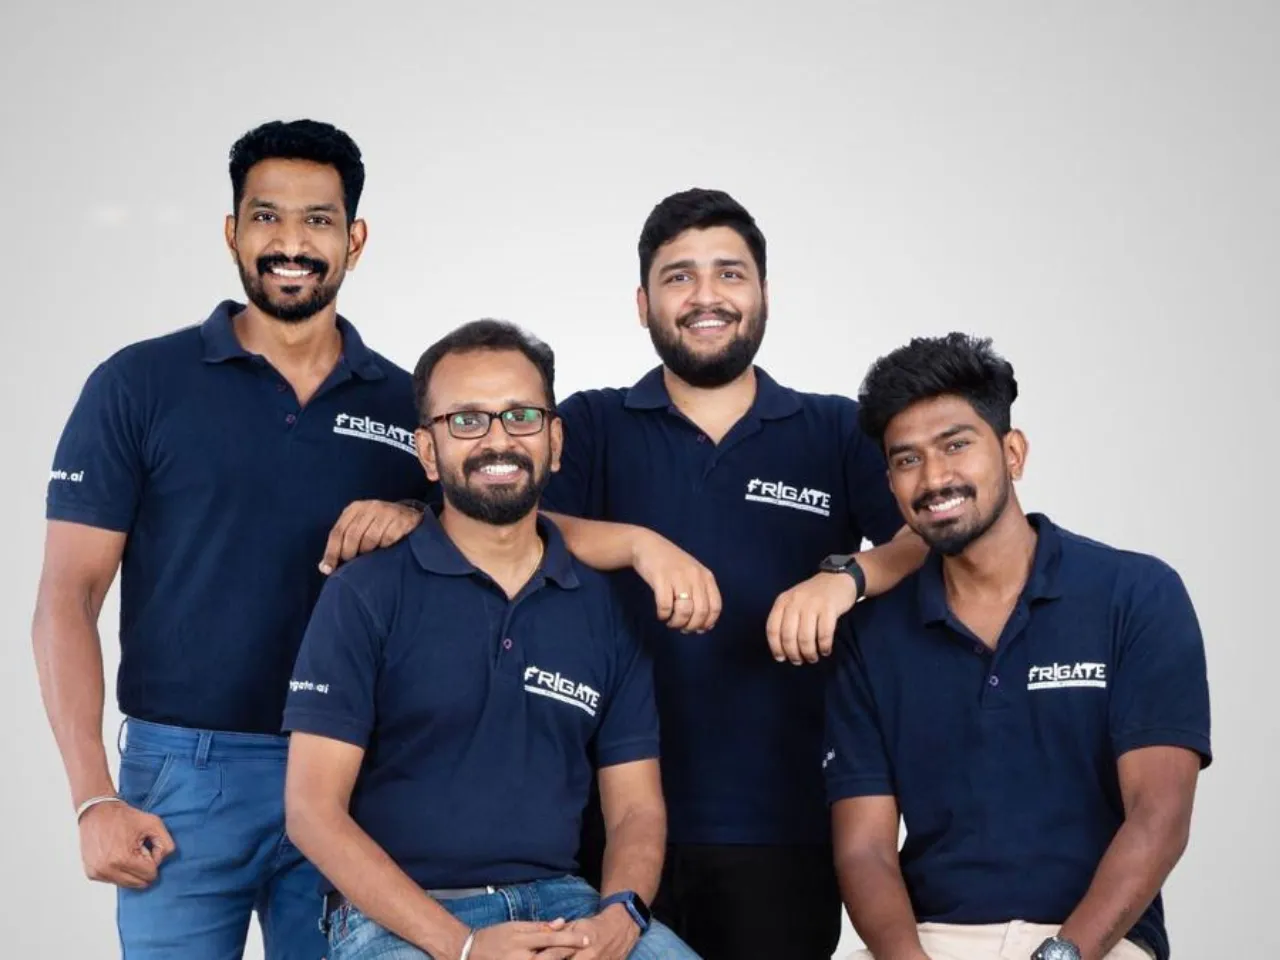 Tamil Nadu's manufacturing startup Frigate raises $1.5M in a seed round